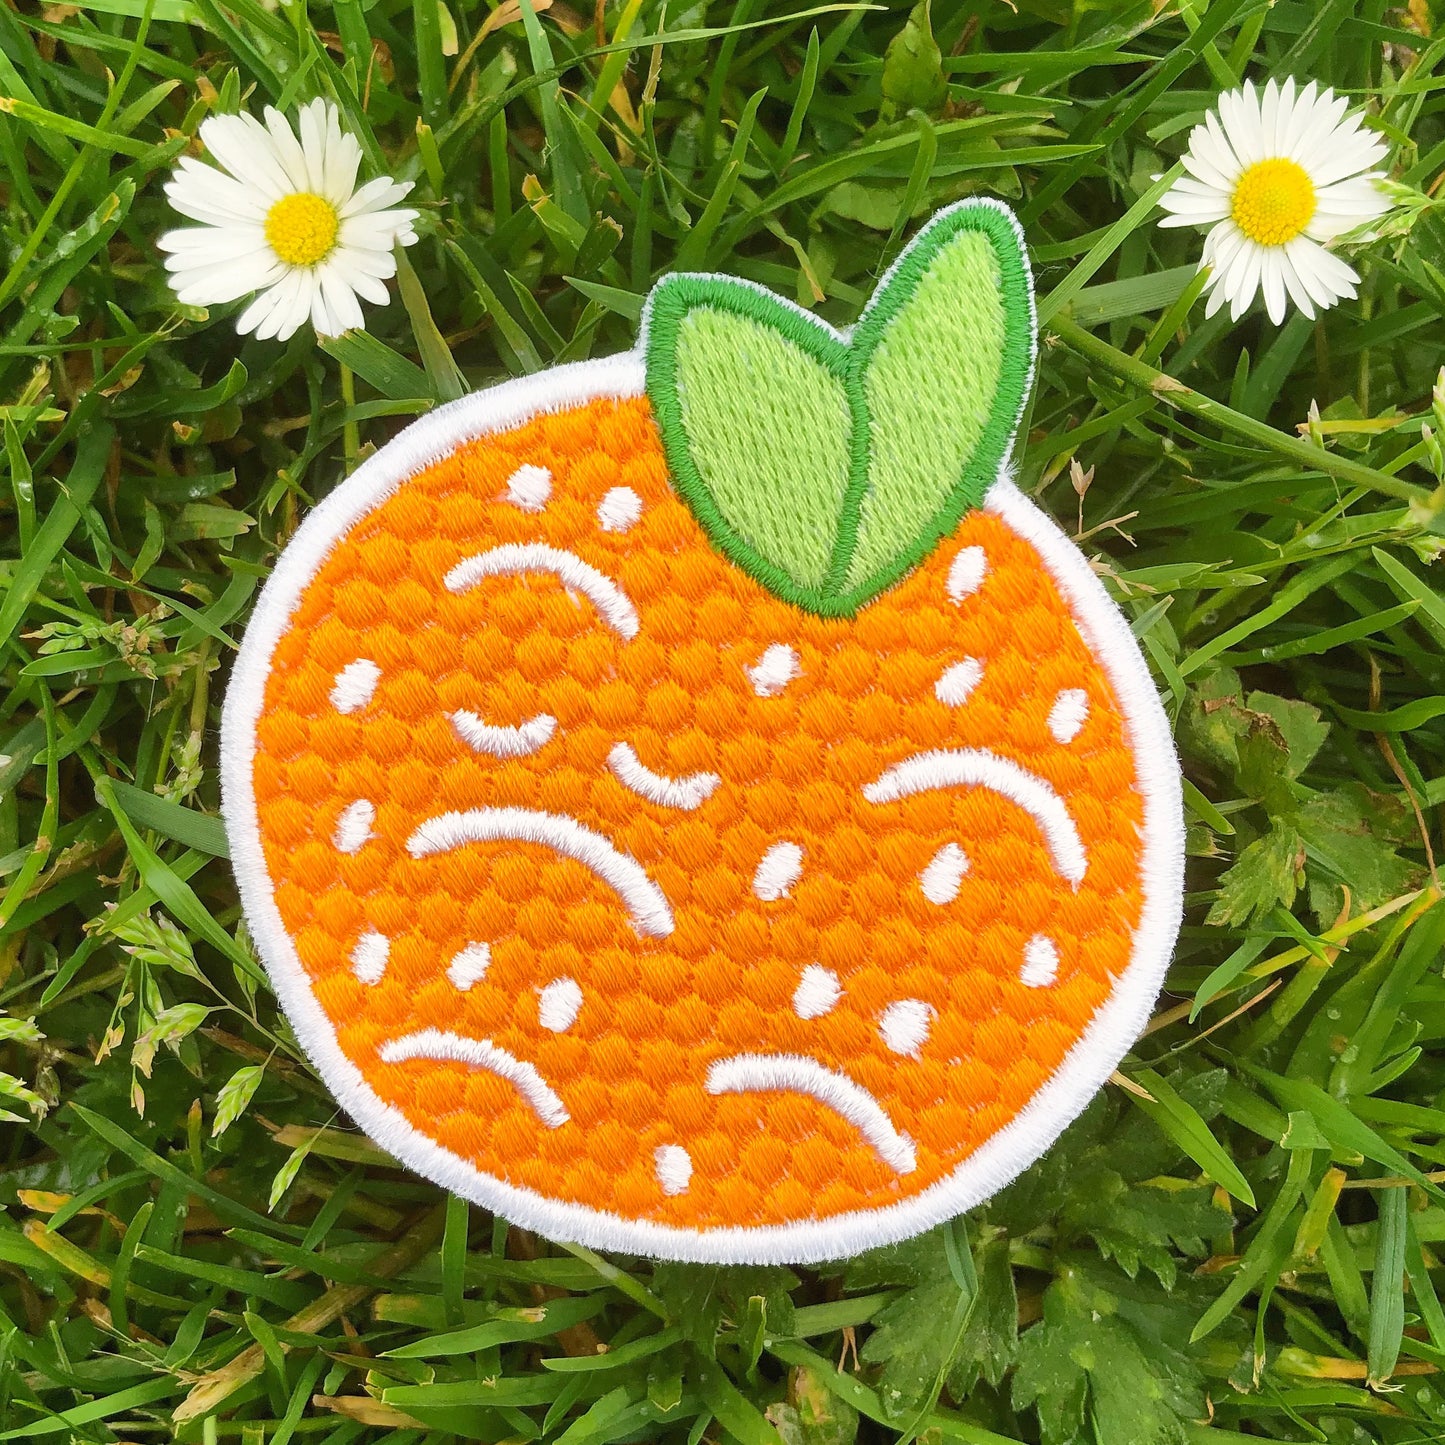 Sad Orange Embroidered Patch!